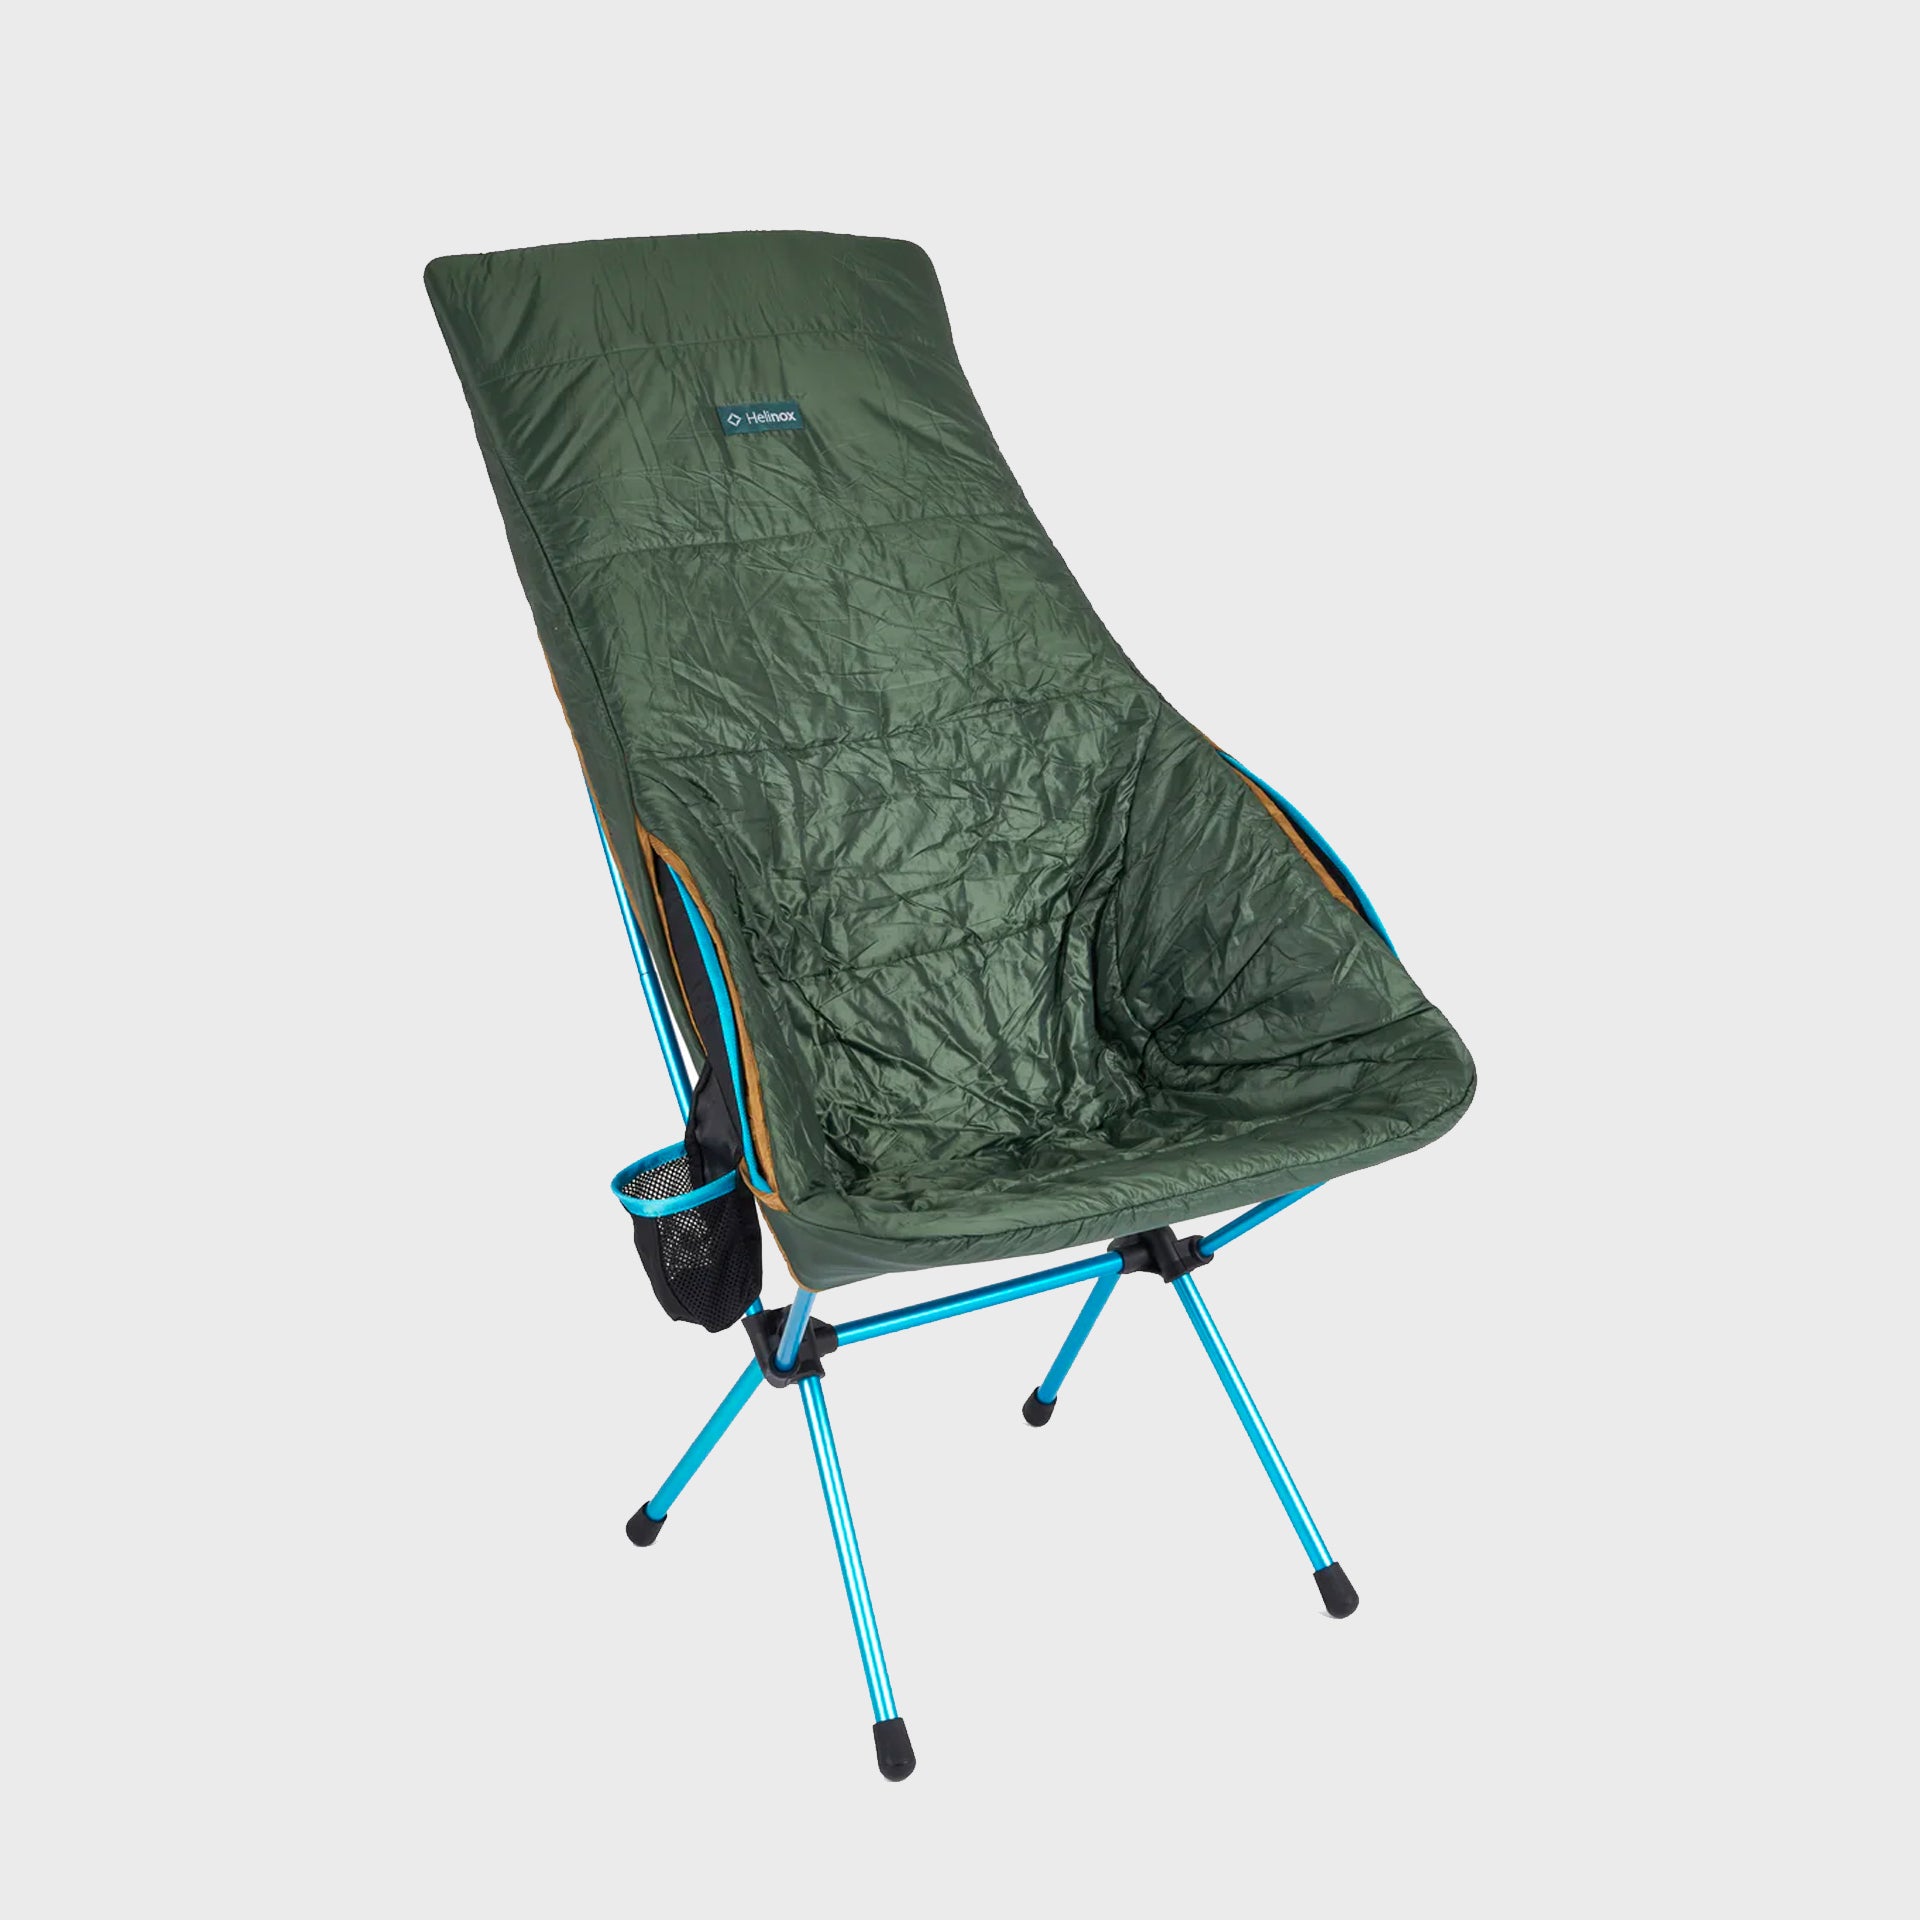 Helinox Seat Warmer For Savanna/Playa Chair - Coyote Tan/Forest Green - ManGo Surfing